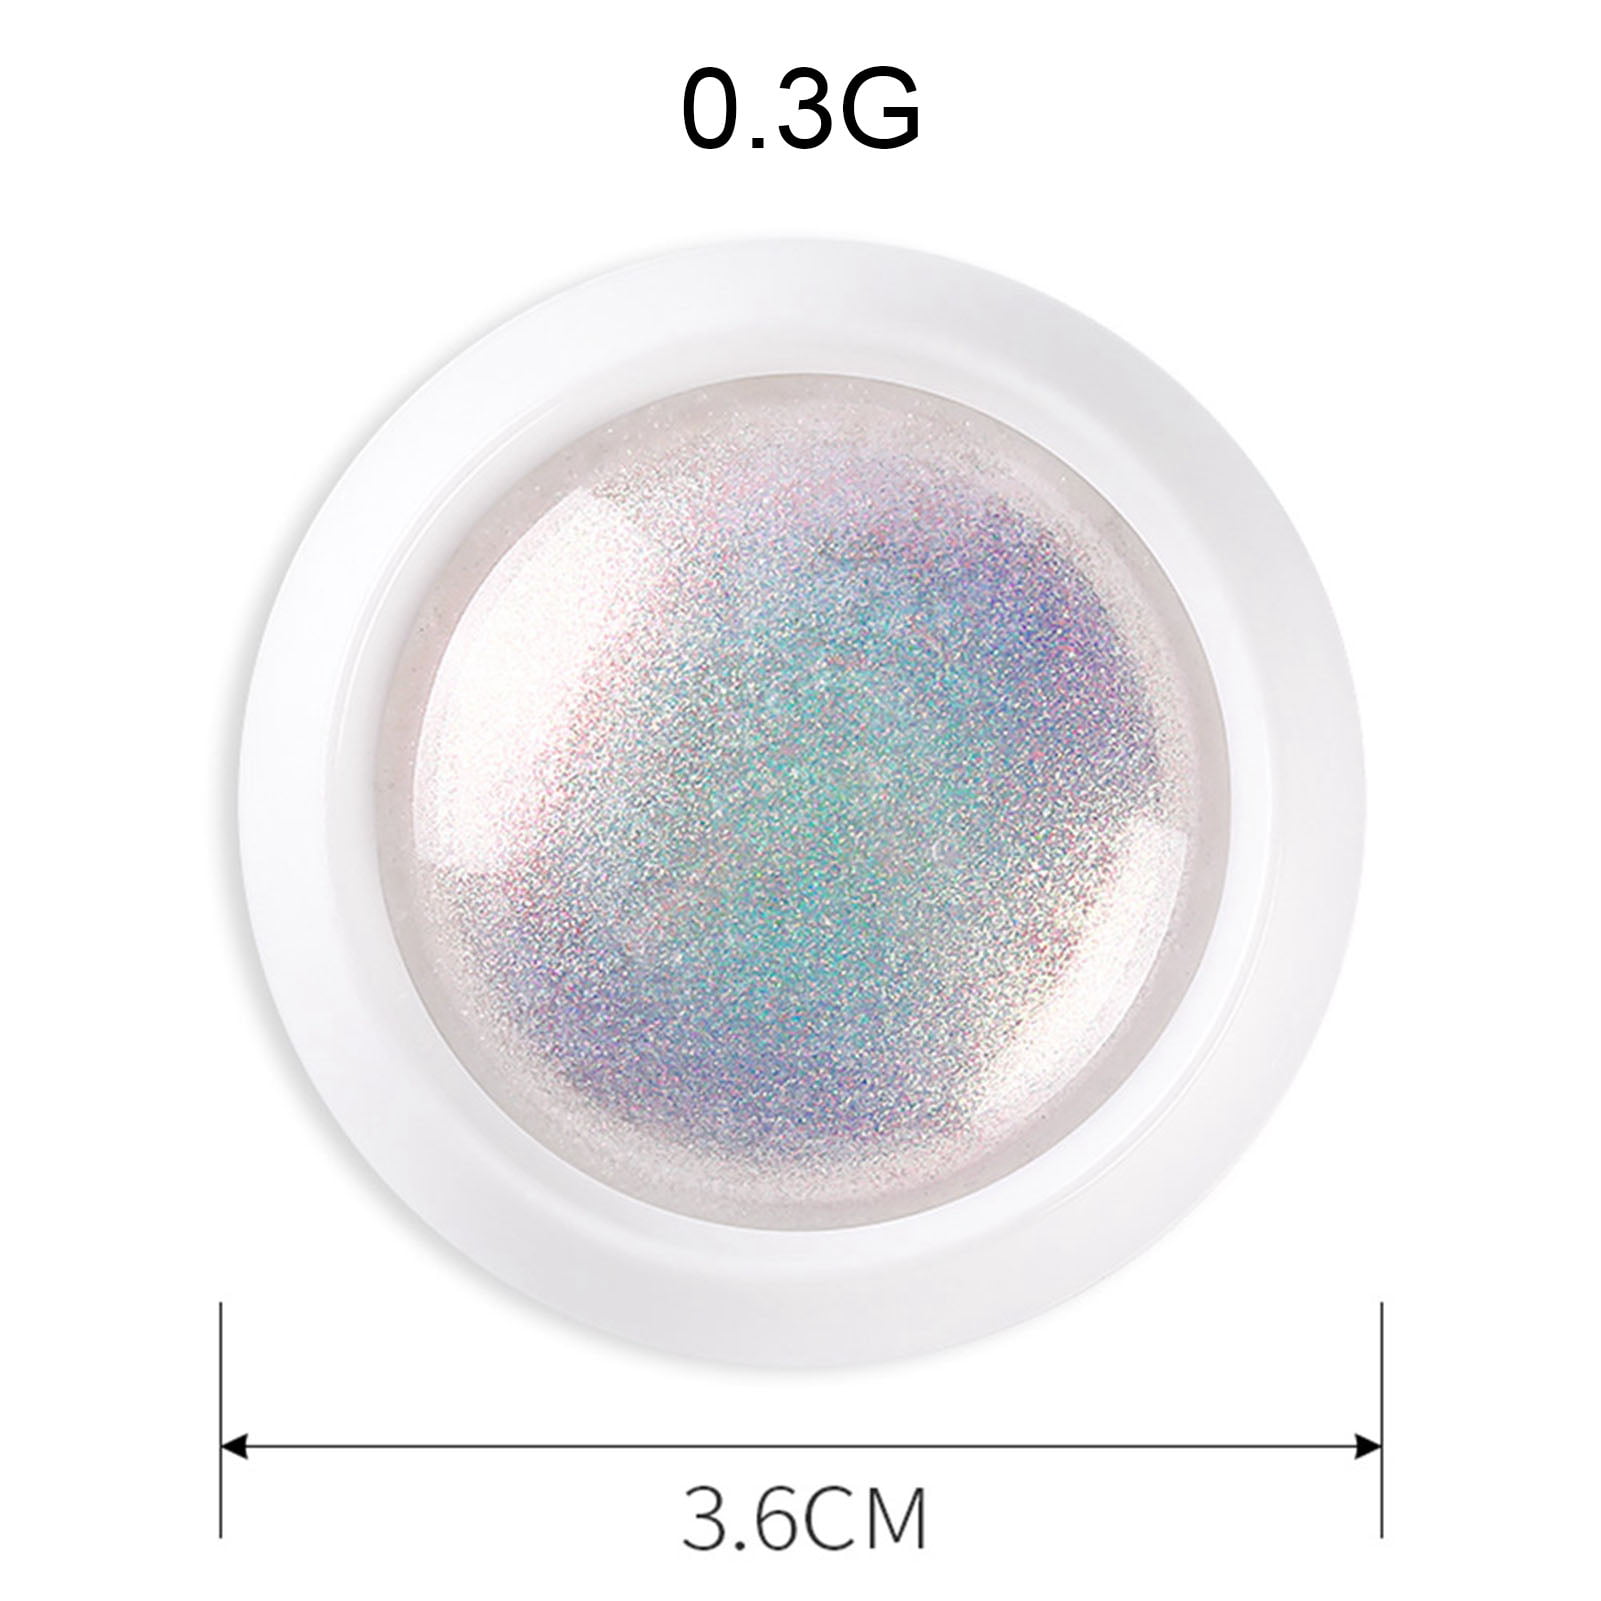 Saviland Pearl Chrome Nail Powder Set 12 Colors Mermaid Mirror Effect Nails Powder for Aurora Rainbow Glitter with Sponge Sticks, Size: 0.3g